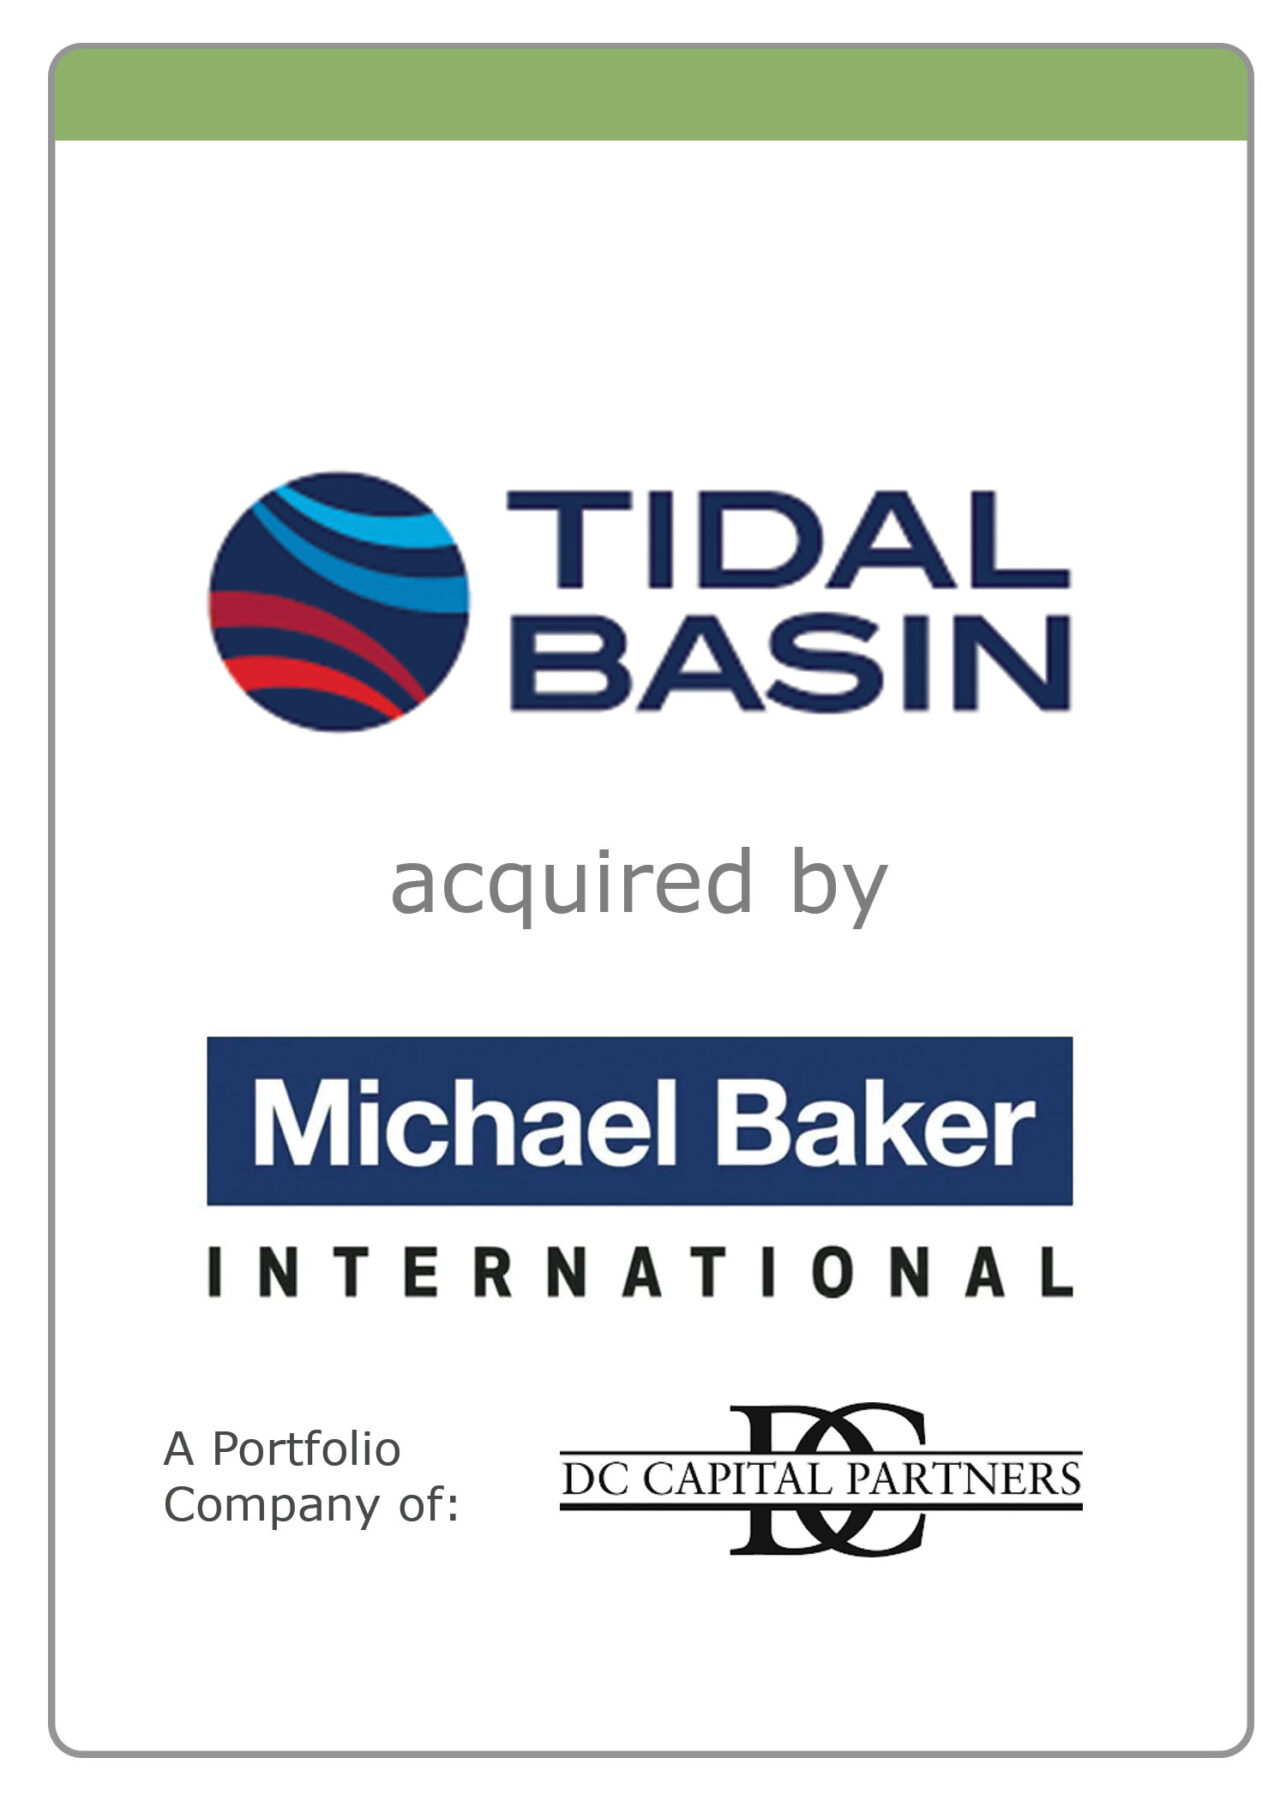 McLean Group advises Tidal Bason on its acquisition by Michael Baker International a DC Capital Partners company.